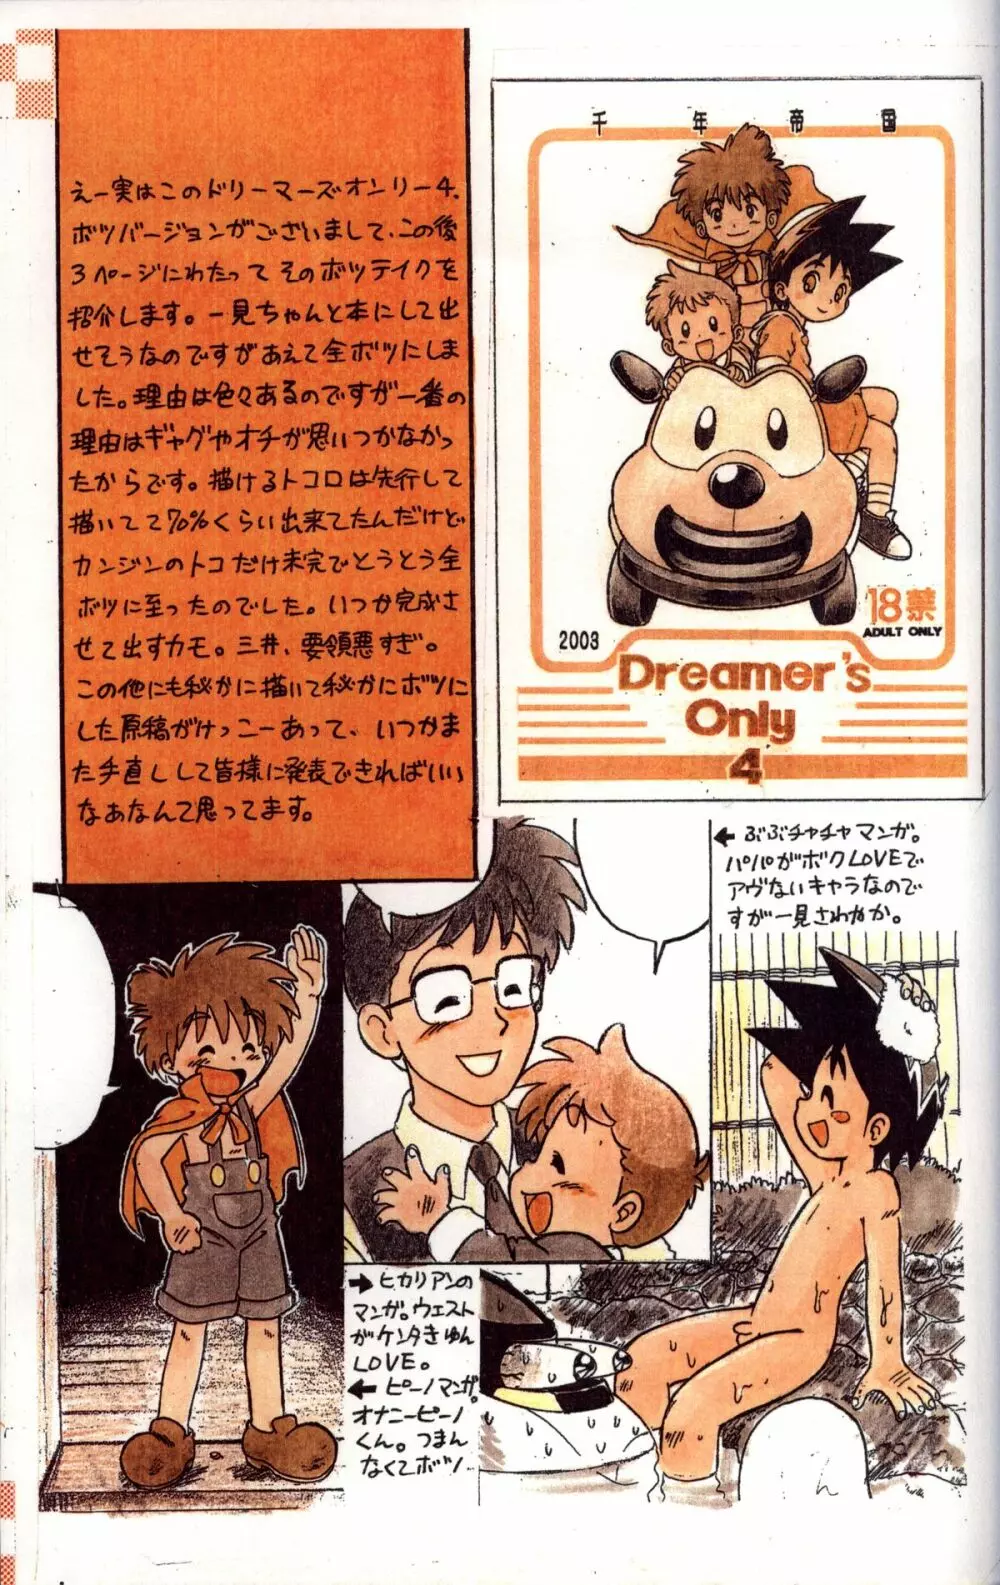 Mitsui Jun - Dreamer's Only 4 Page.17